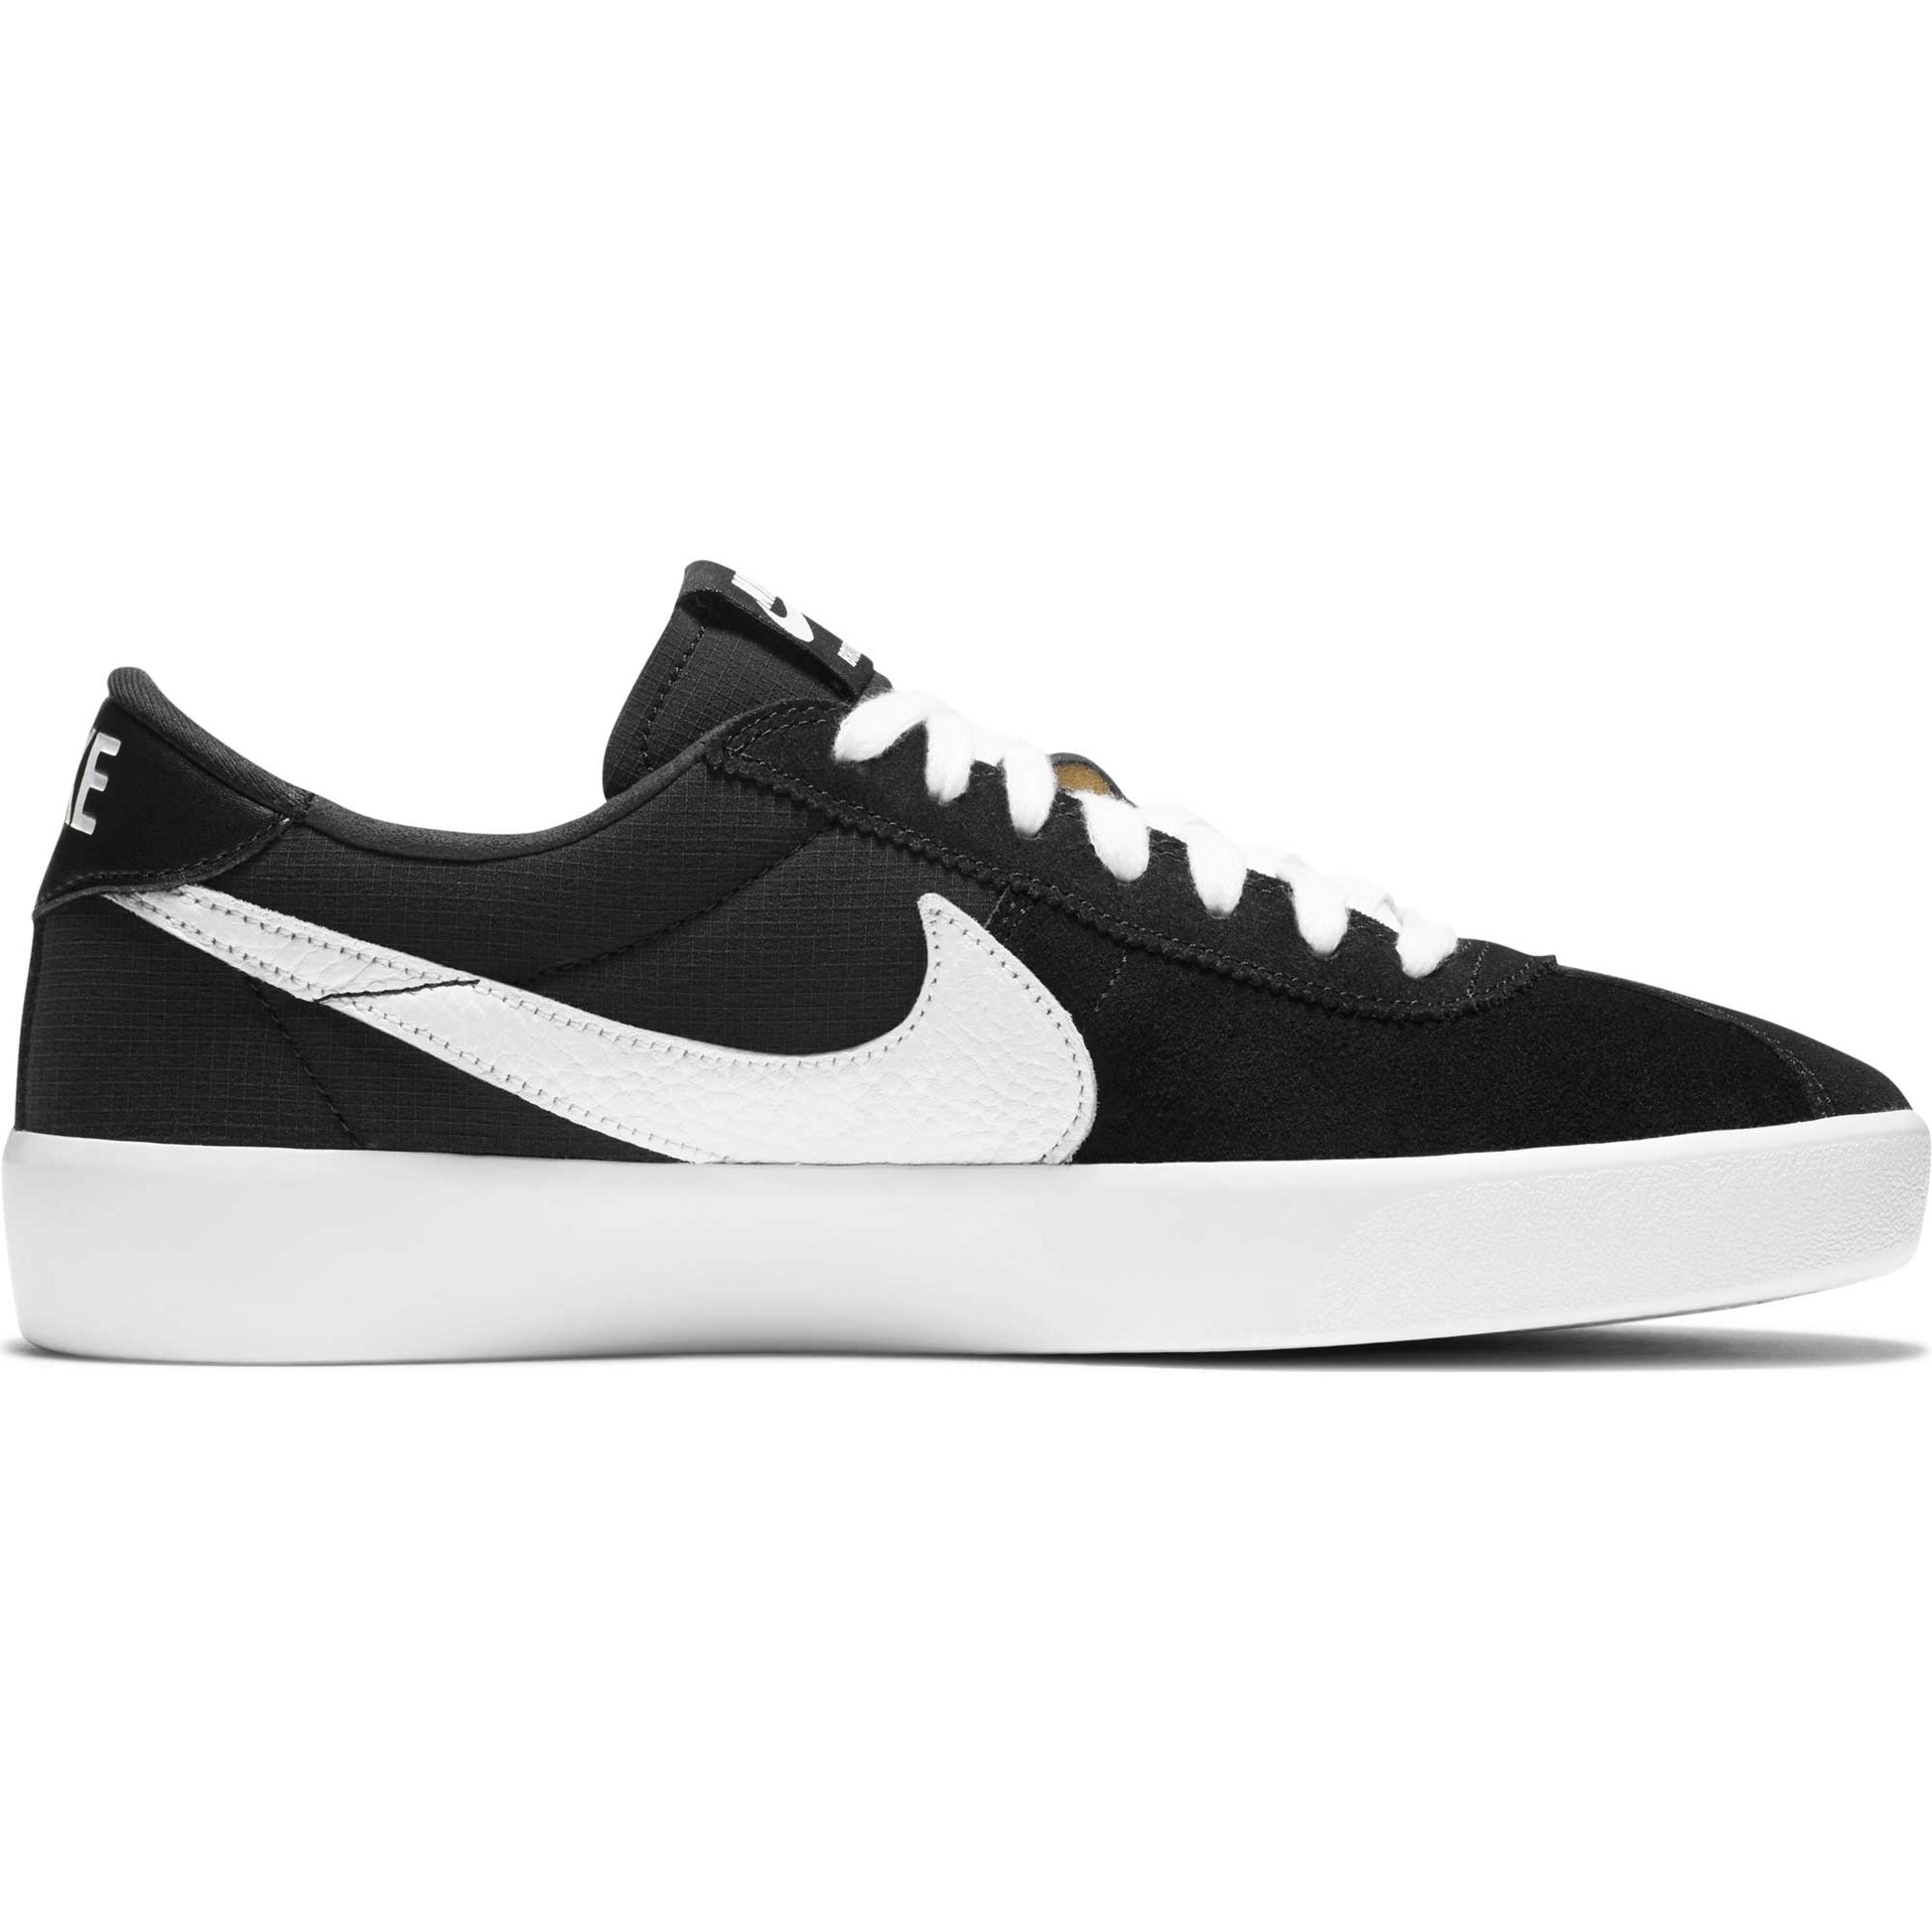 Nike SB Bruin React, black/white-black-anthracite - Tiki Room Skateboards - 10